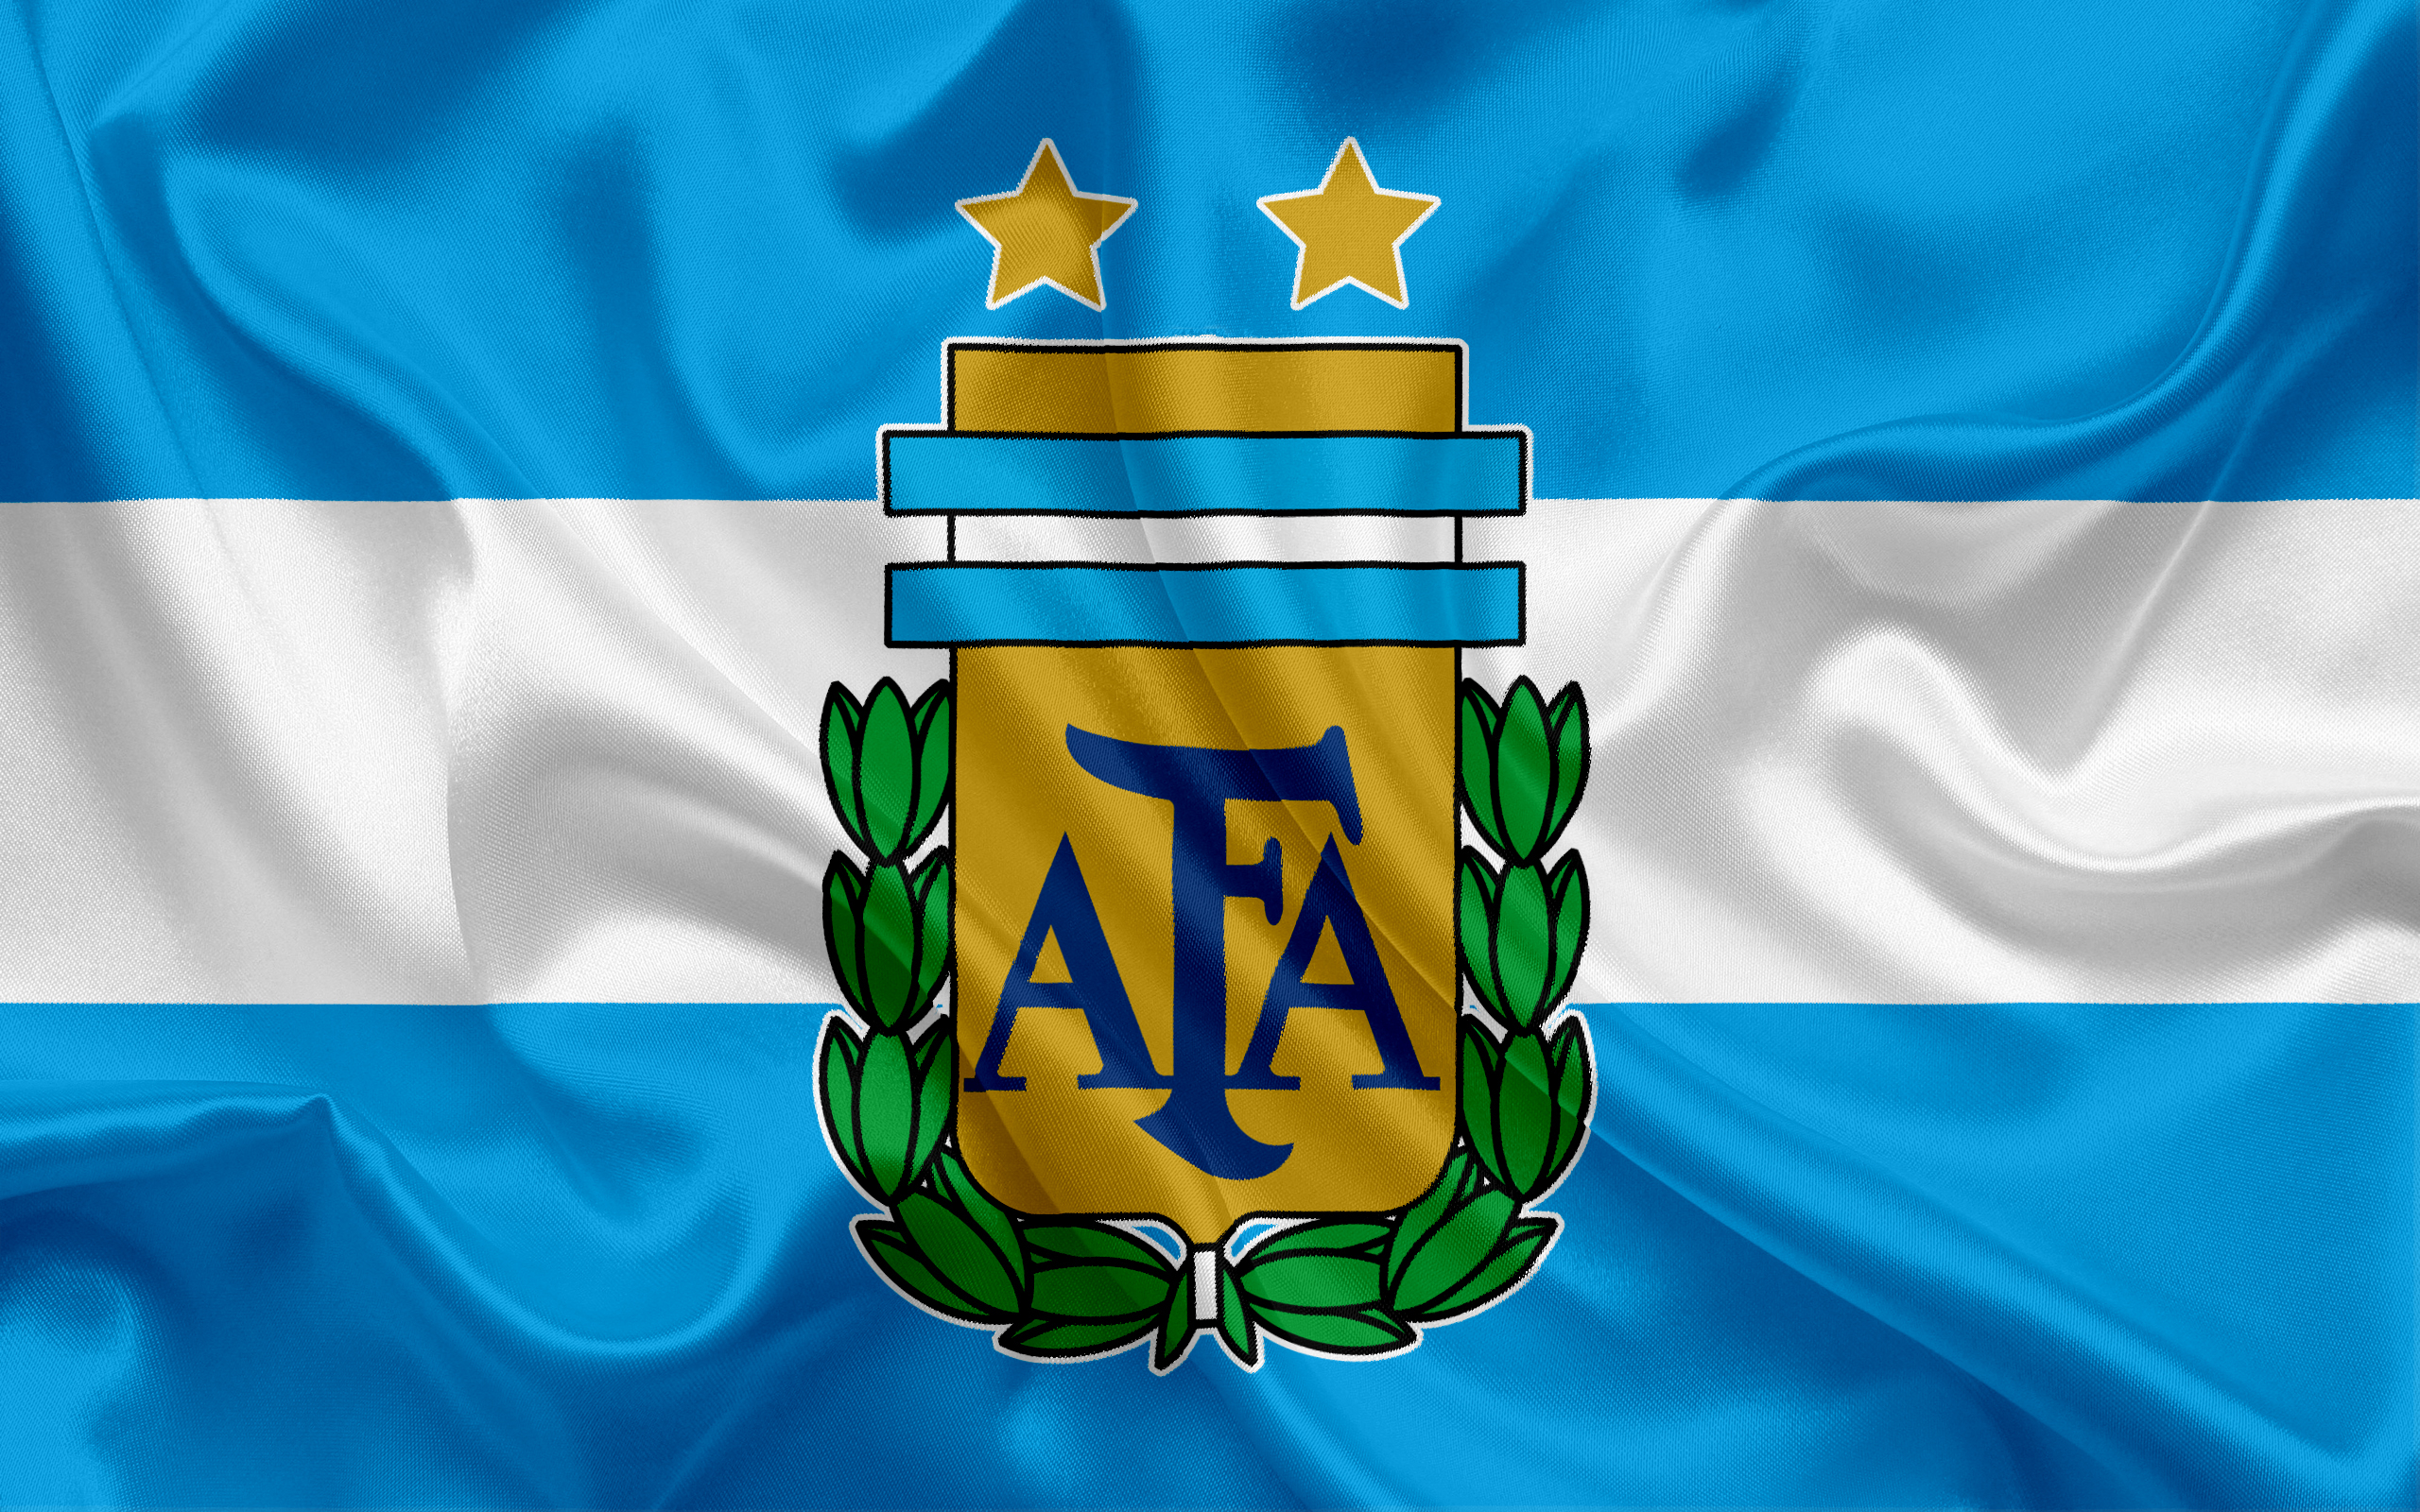 451465 descargar imagen selección argentina de fútbol, deporte, argentina, emblema, logo, fútbol: fondos de pantalla y protectores de pantalla gratis